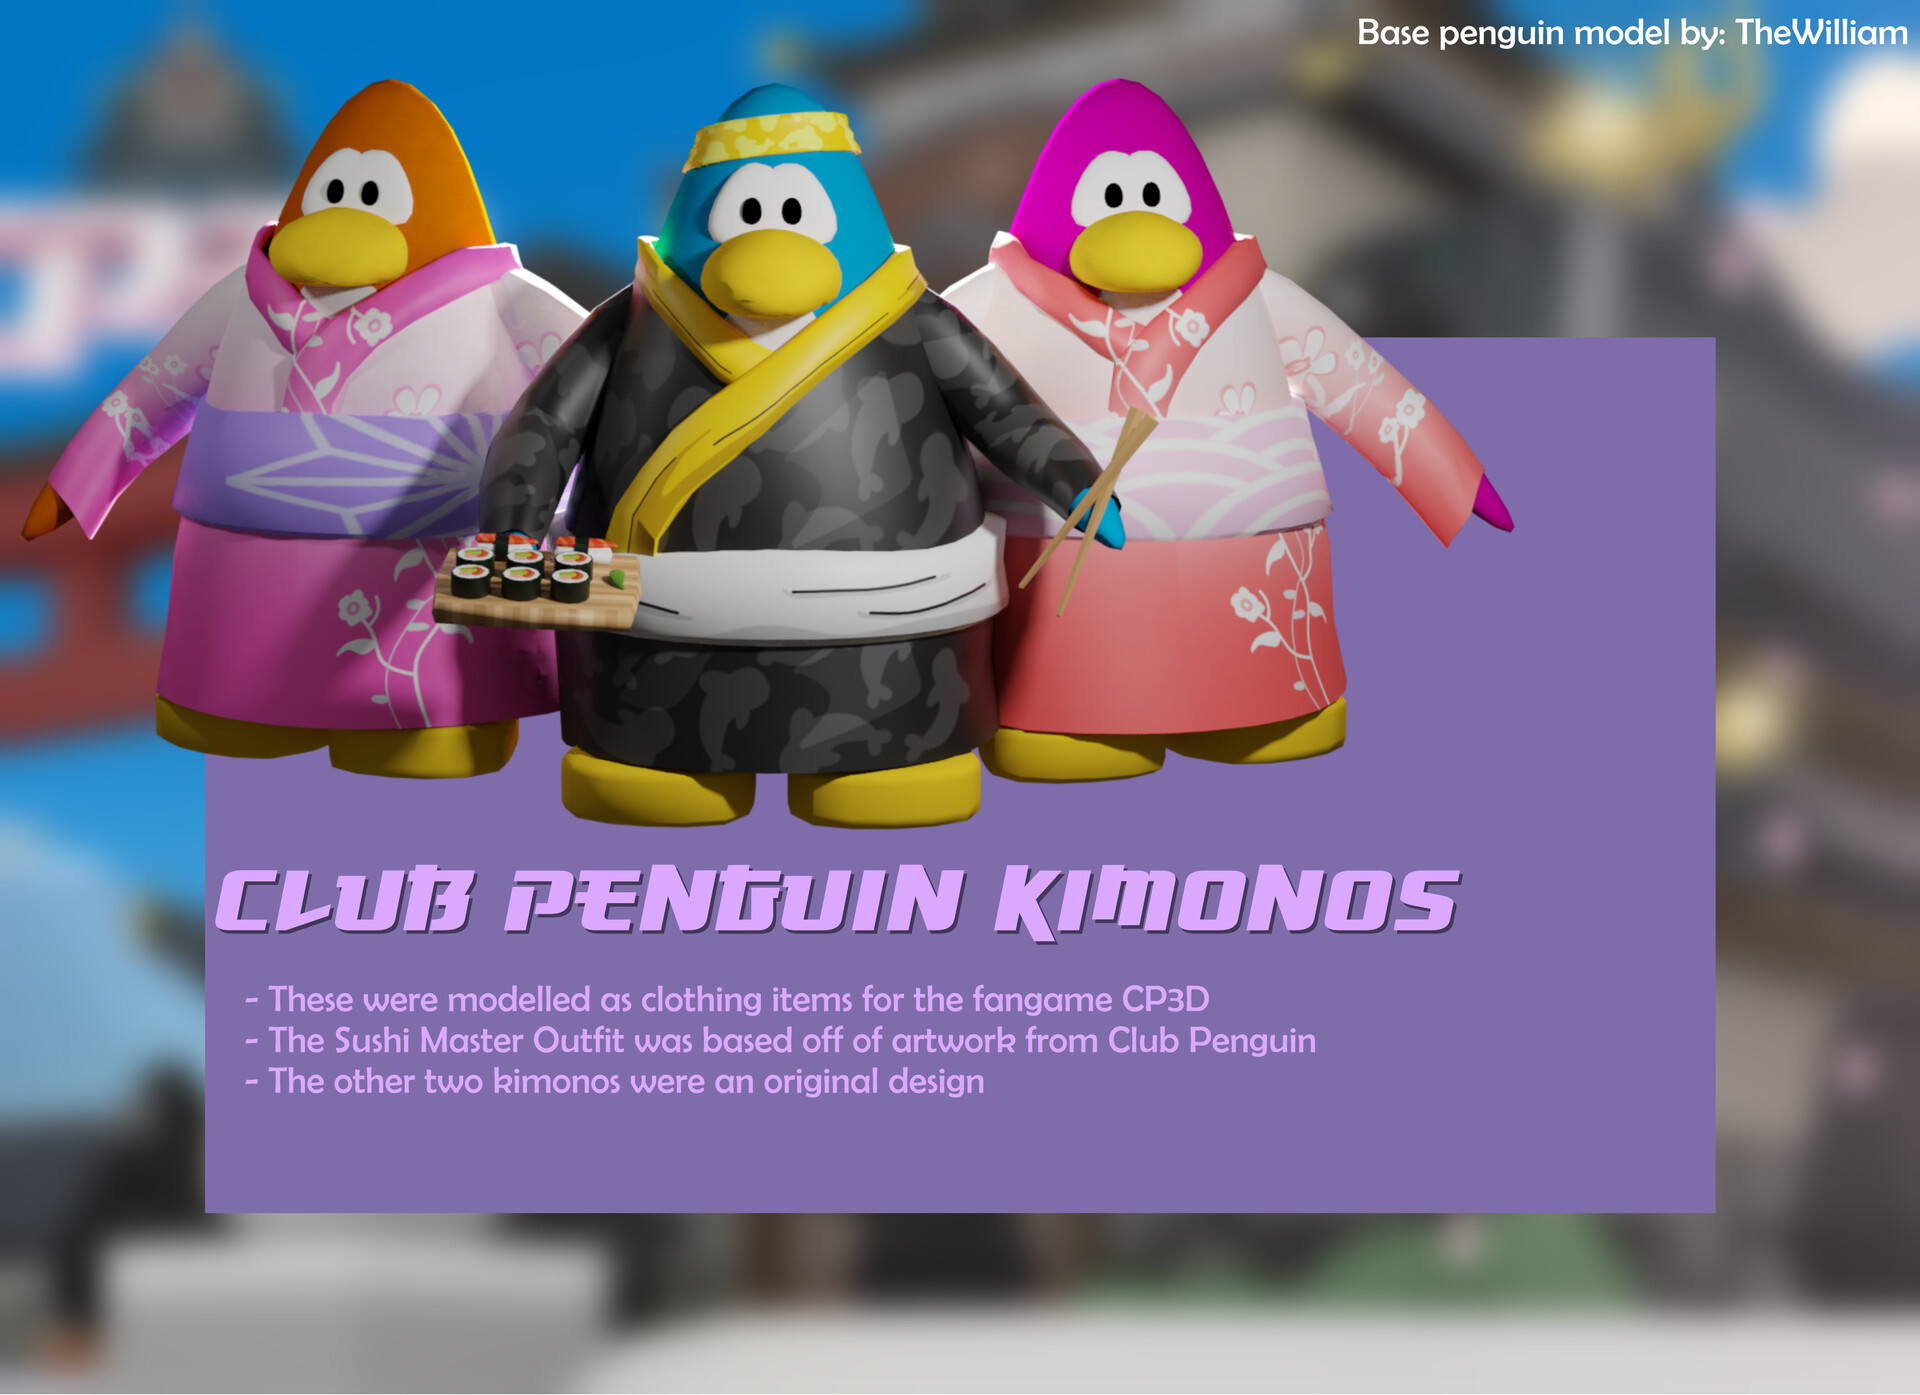 ArtStation - Club Penguin Island: Character Design